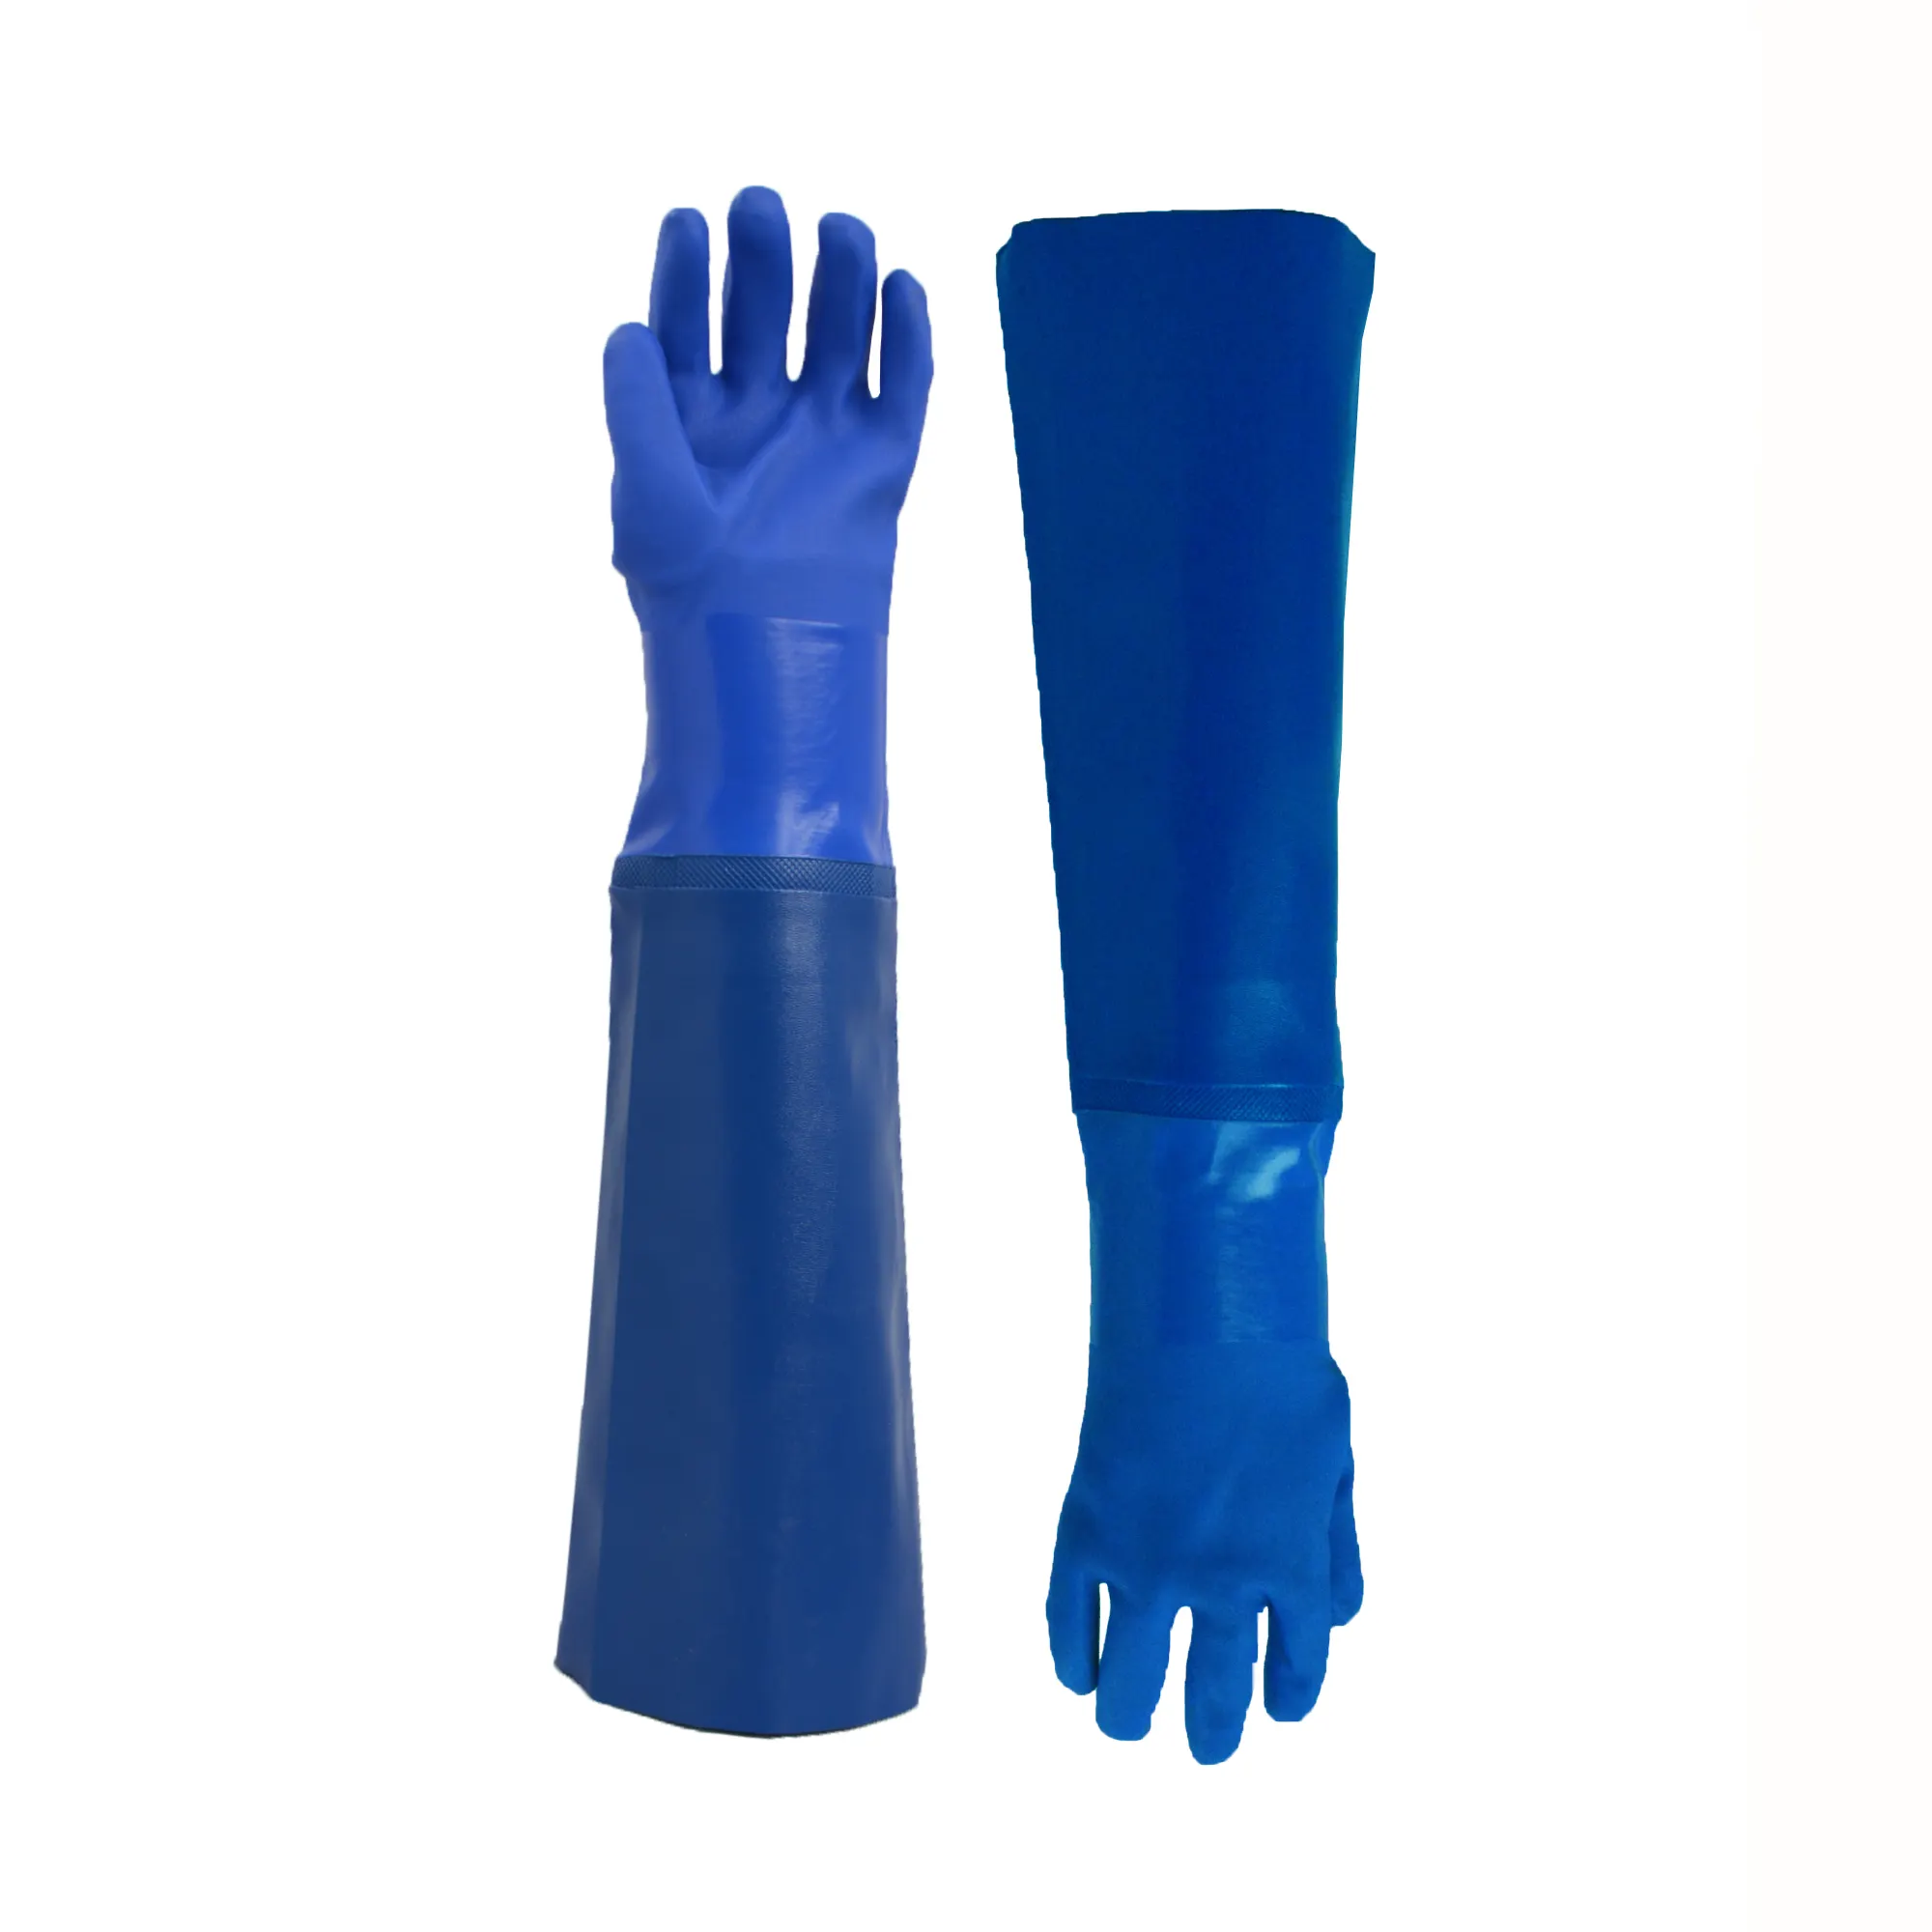 PRI sarung tangan biru pvc sarung tangan celup penuh katun sandy palm lapisan sarung tangan mekanik keselamatan kerja sarung tangan berkebun